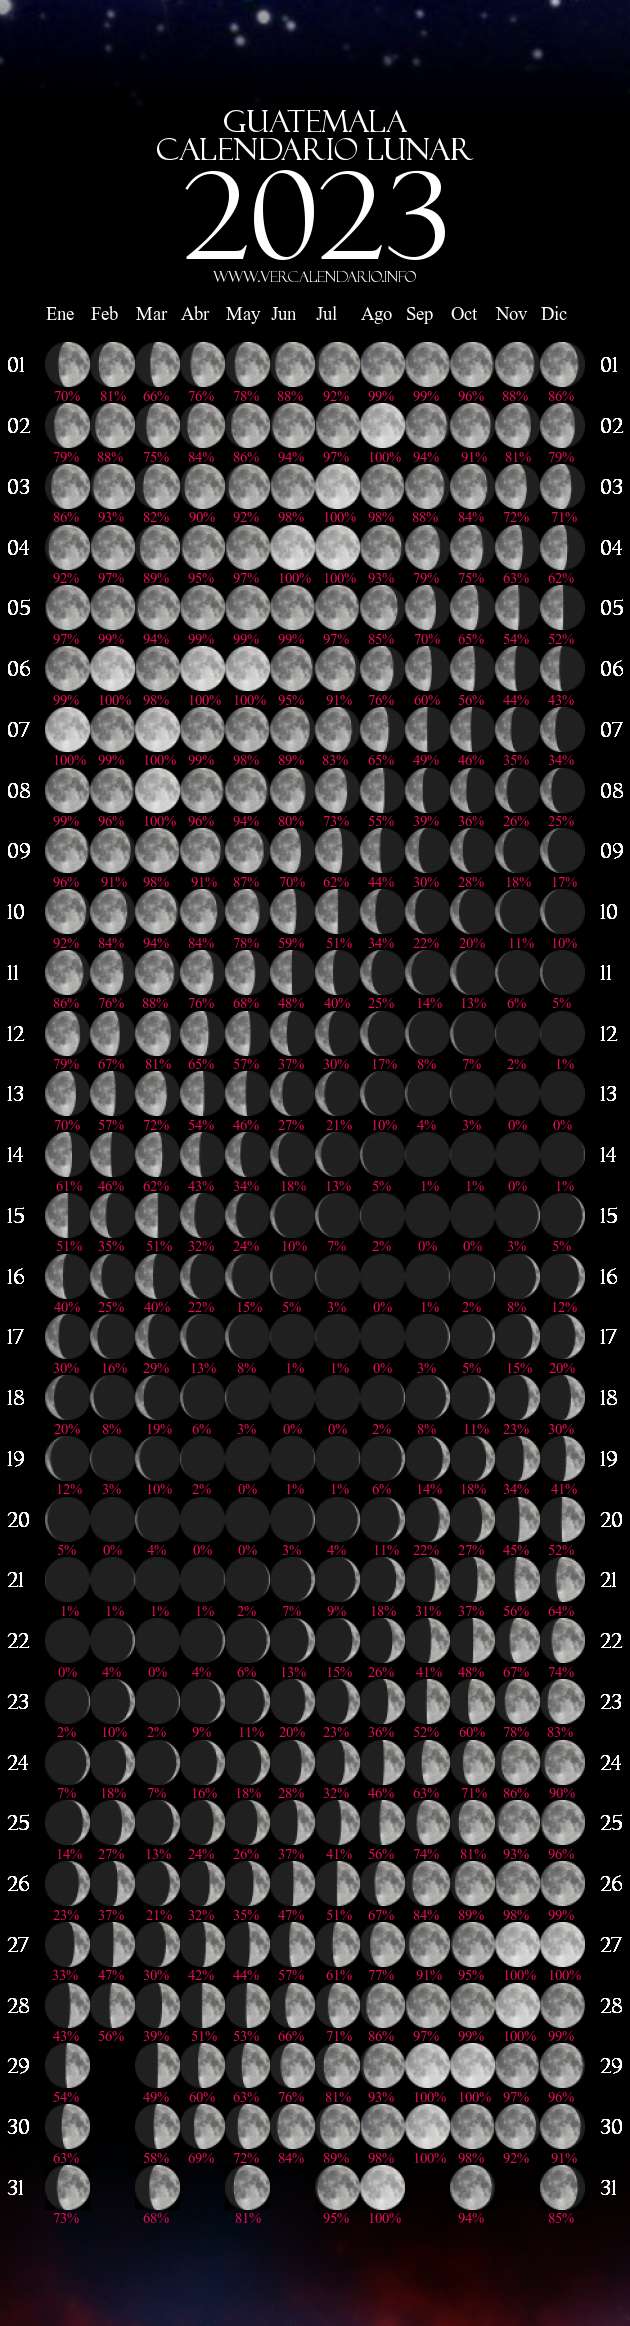 Calendario Lunar 2023 (Guatemala)